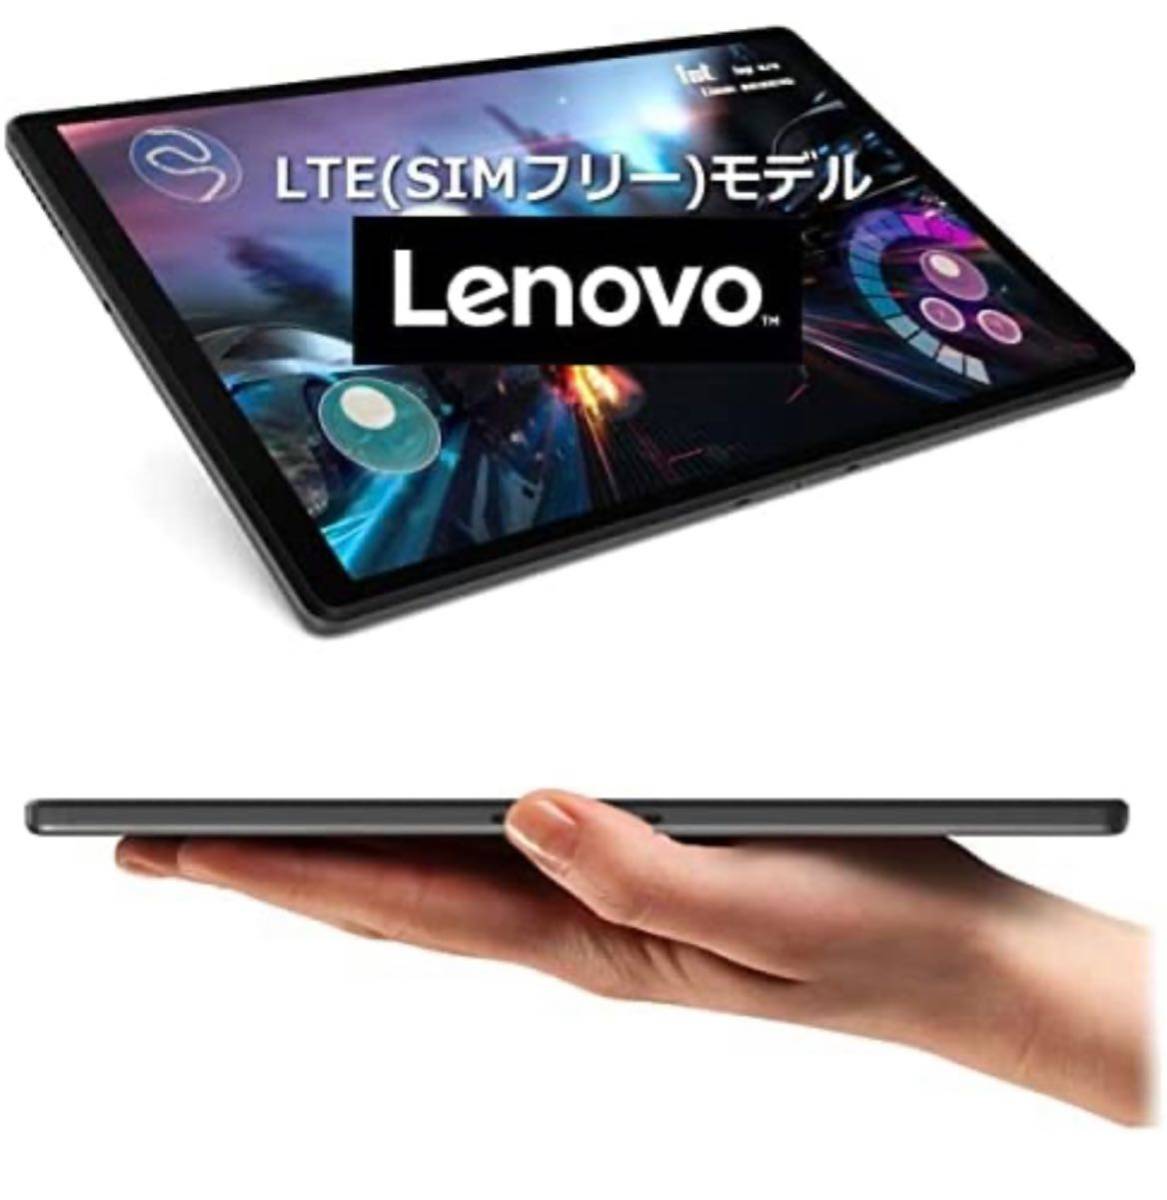 Lenovo Tab M10 FHD Plus MediaTek Helio P22T Tab 8コア CPU 4GB 64GB 高速無線LANIEEE802.11ac Bluetooth5.0 前背面カメラ 256GB対応